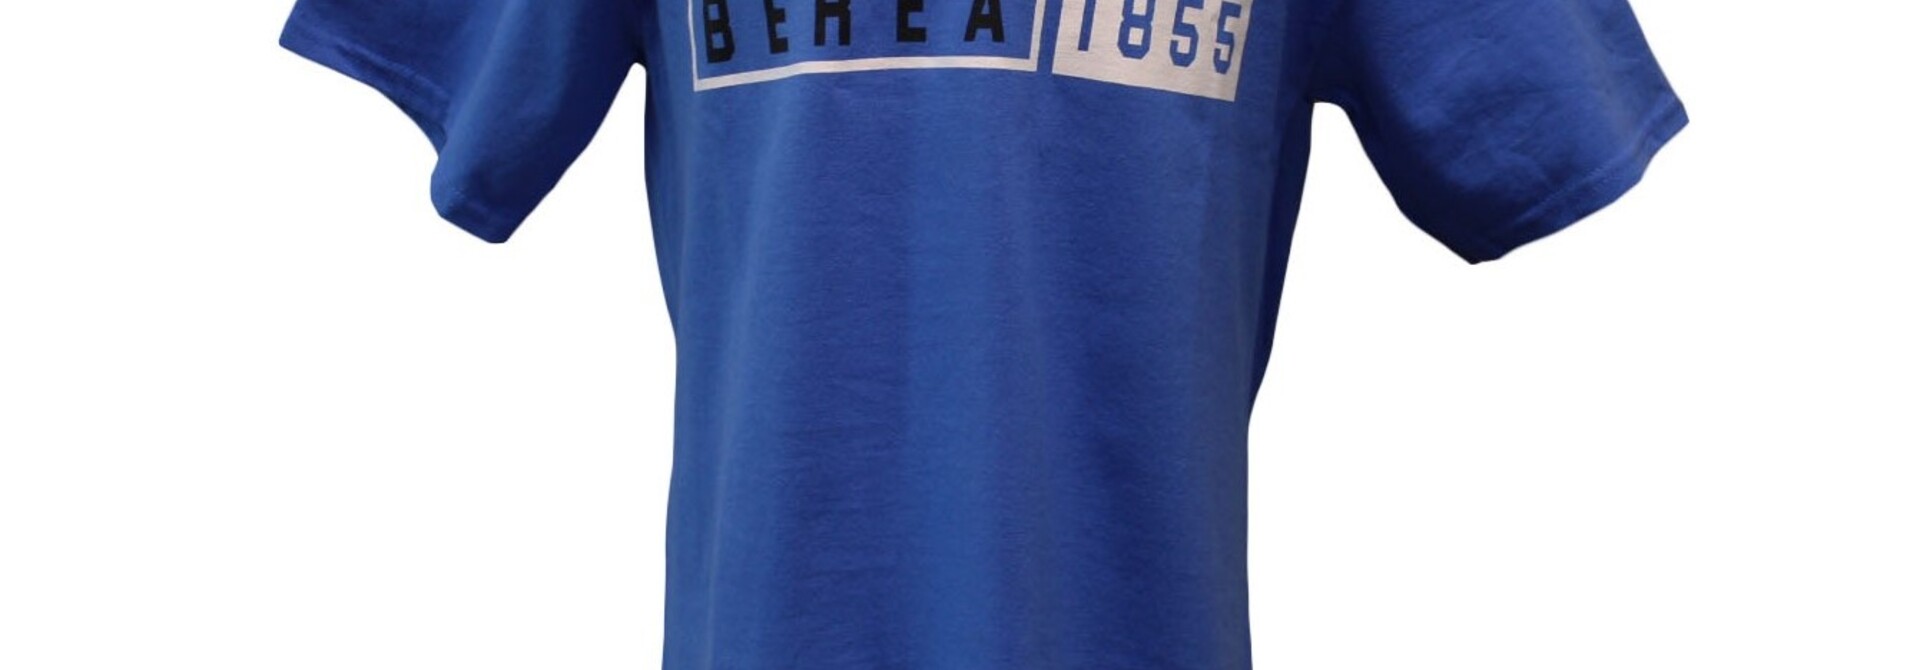 Mountaineers Berea 1855 T-shirt